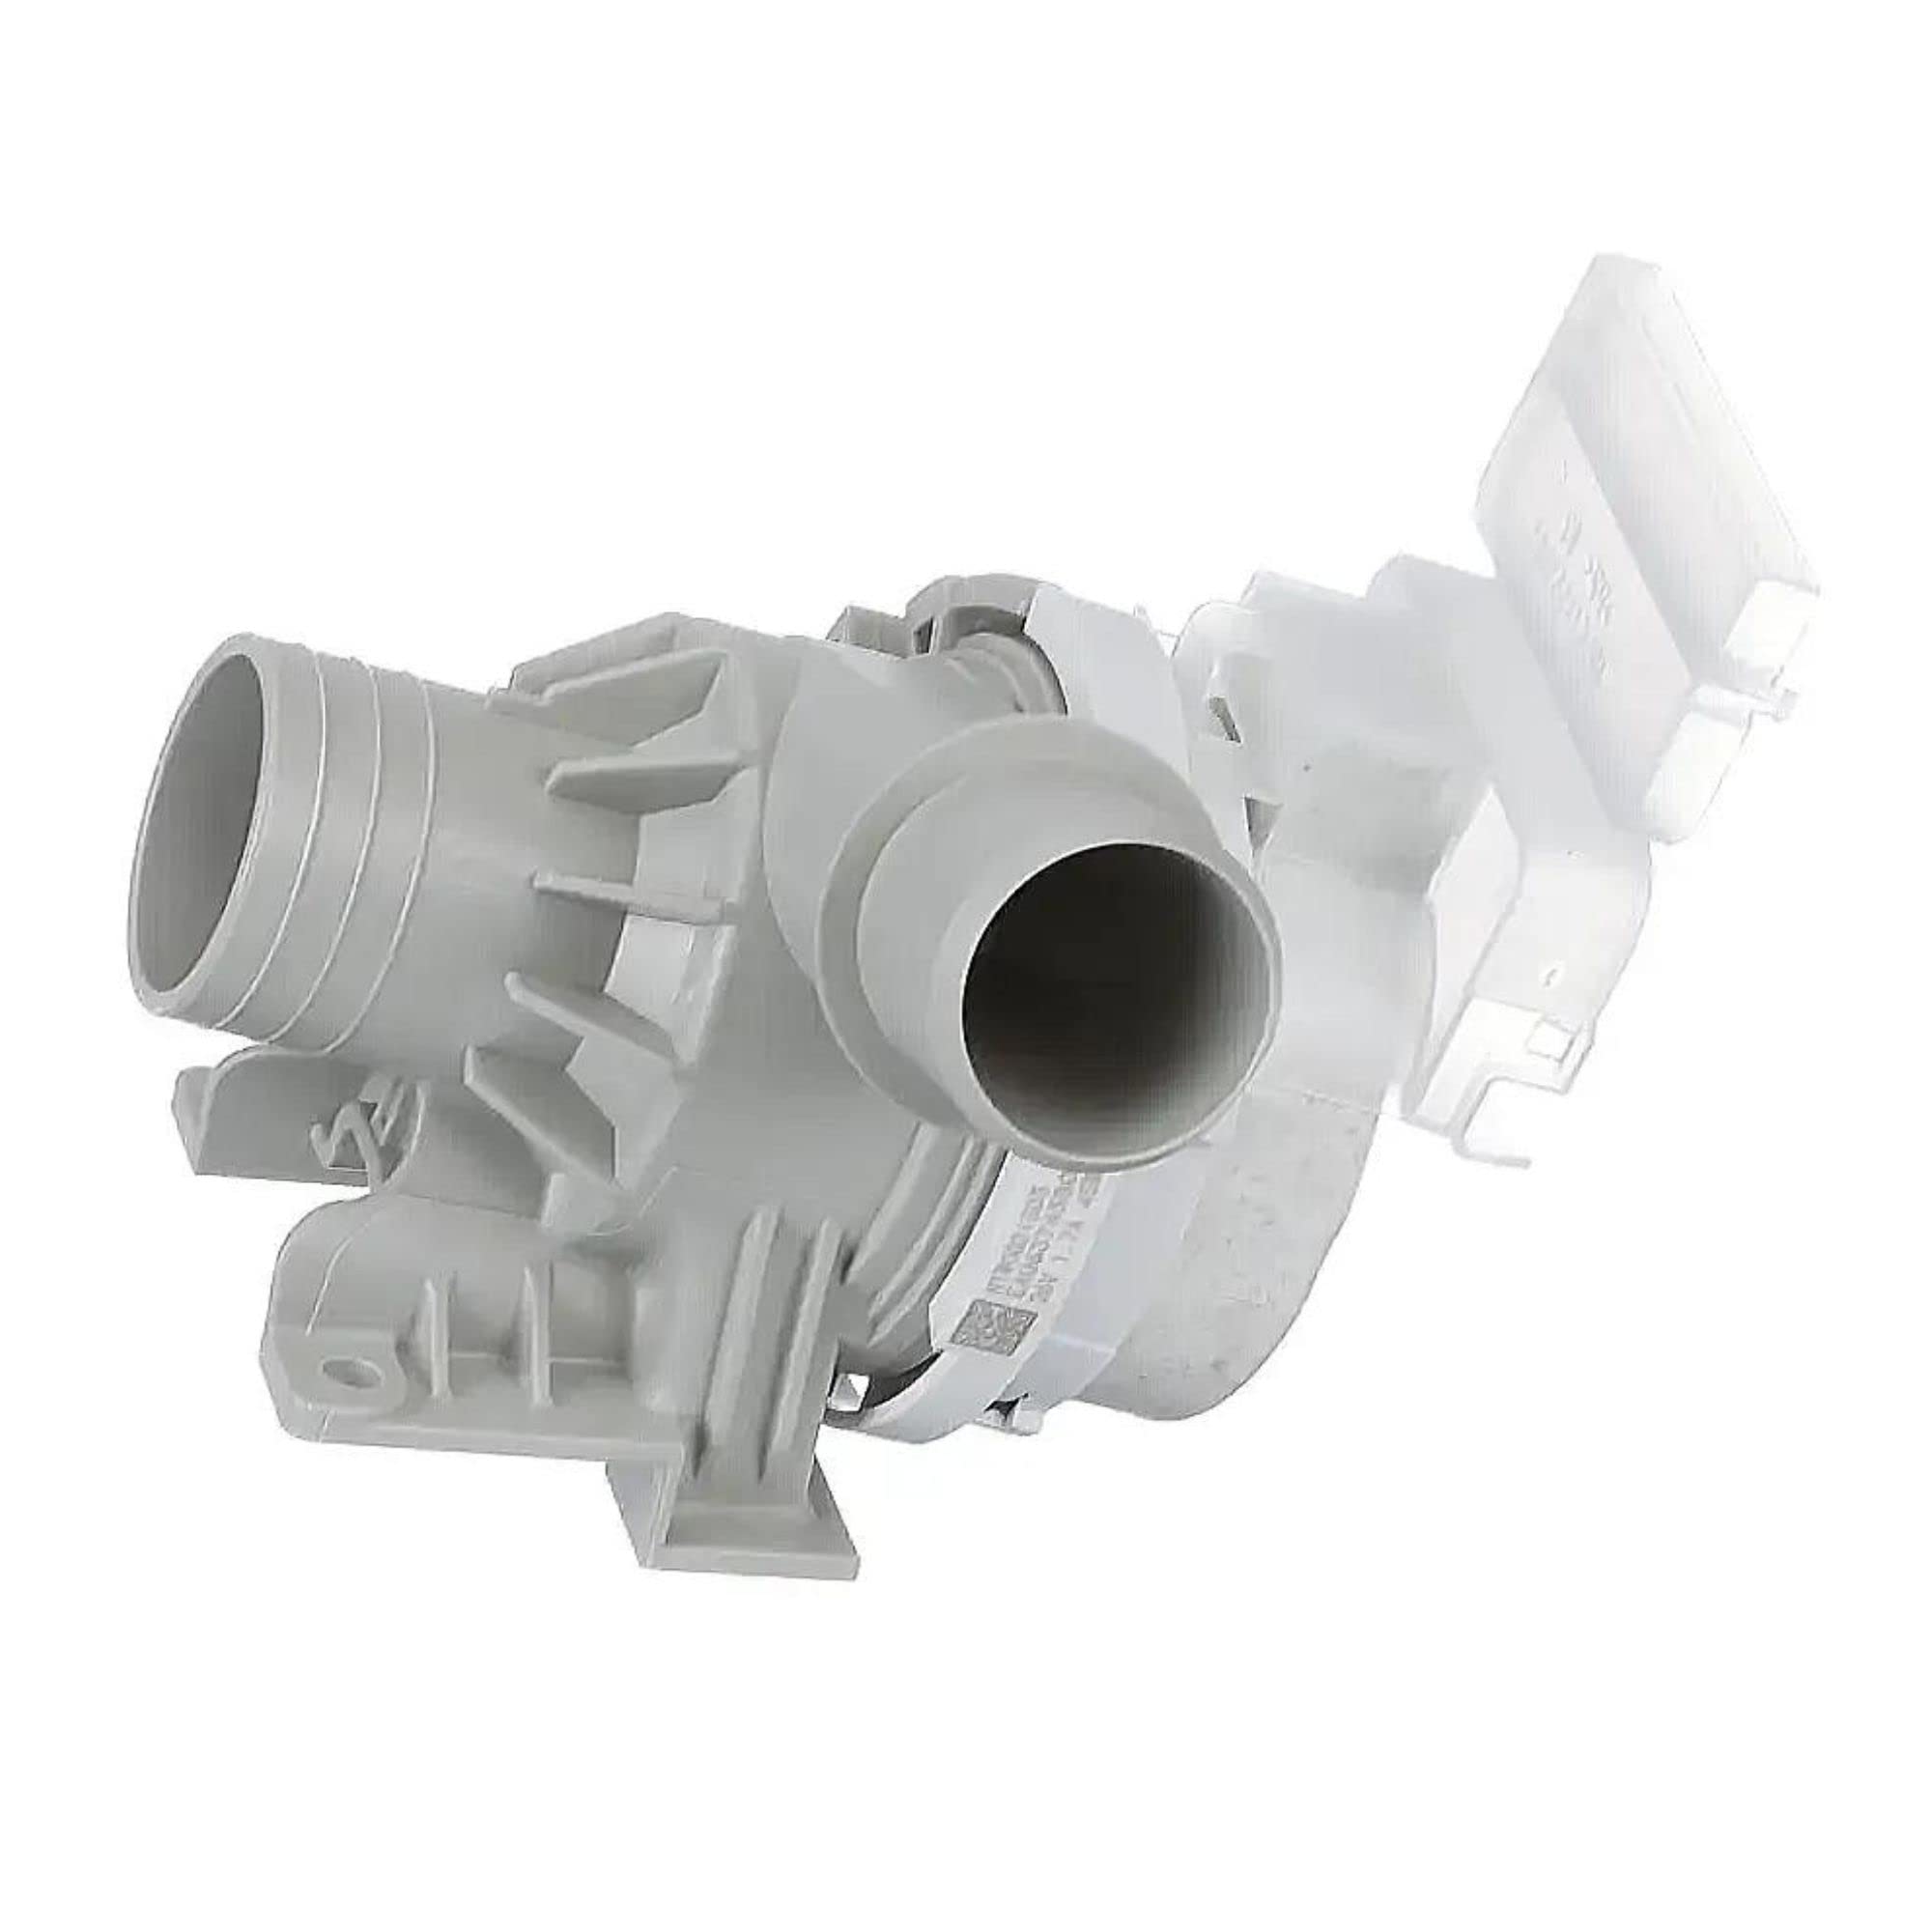 LG AHA75673404 Washer Drain Pump Assembly